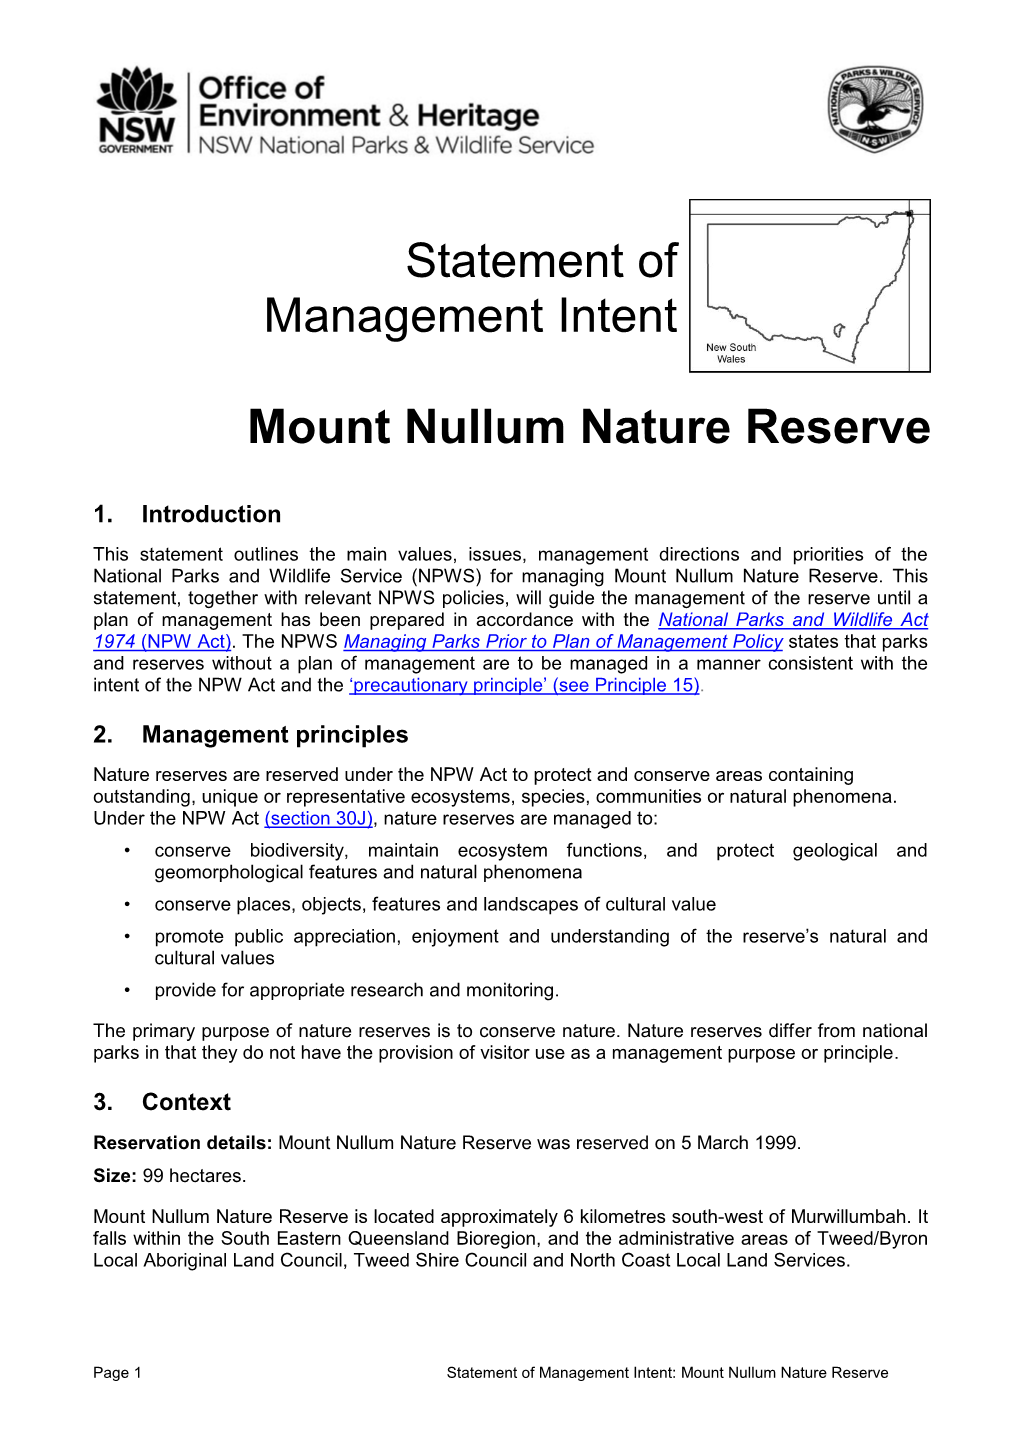 Statement of Management Intent: Mount Nullum Nature Reserve